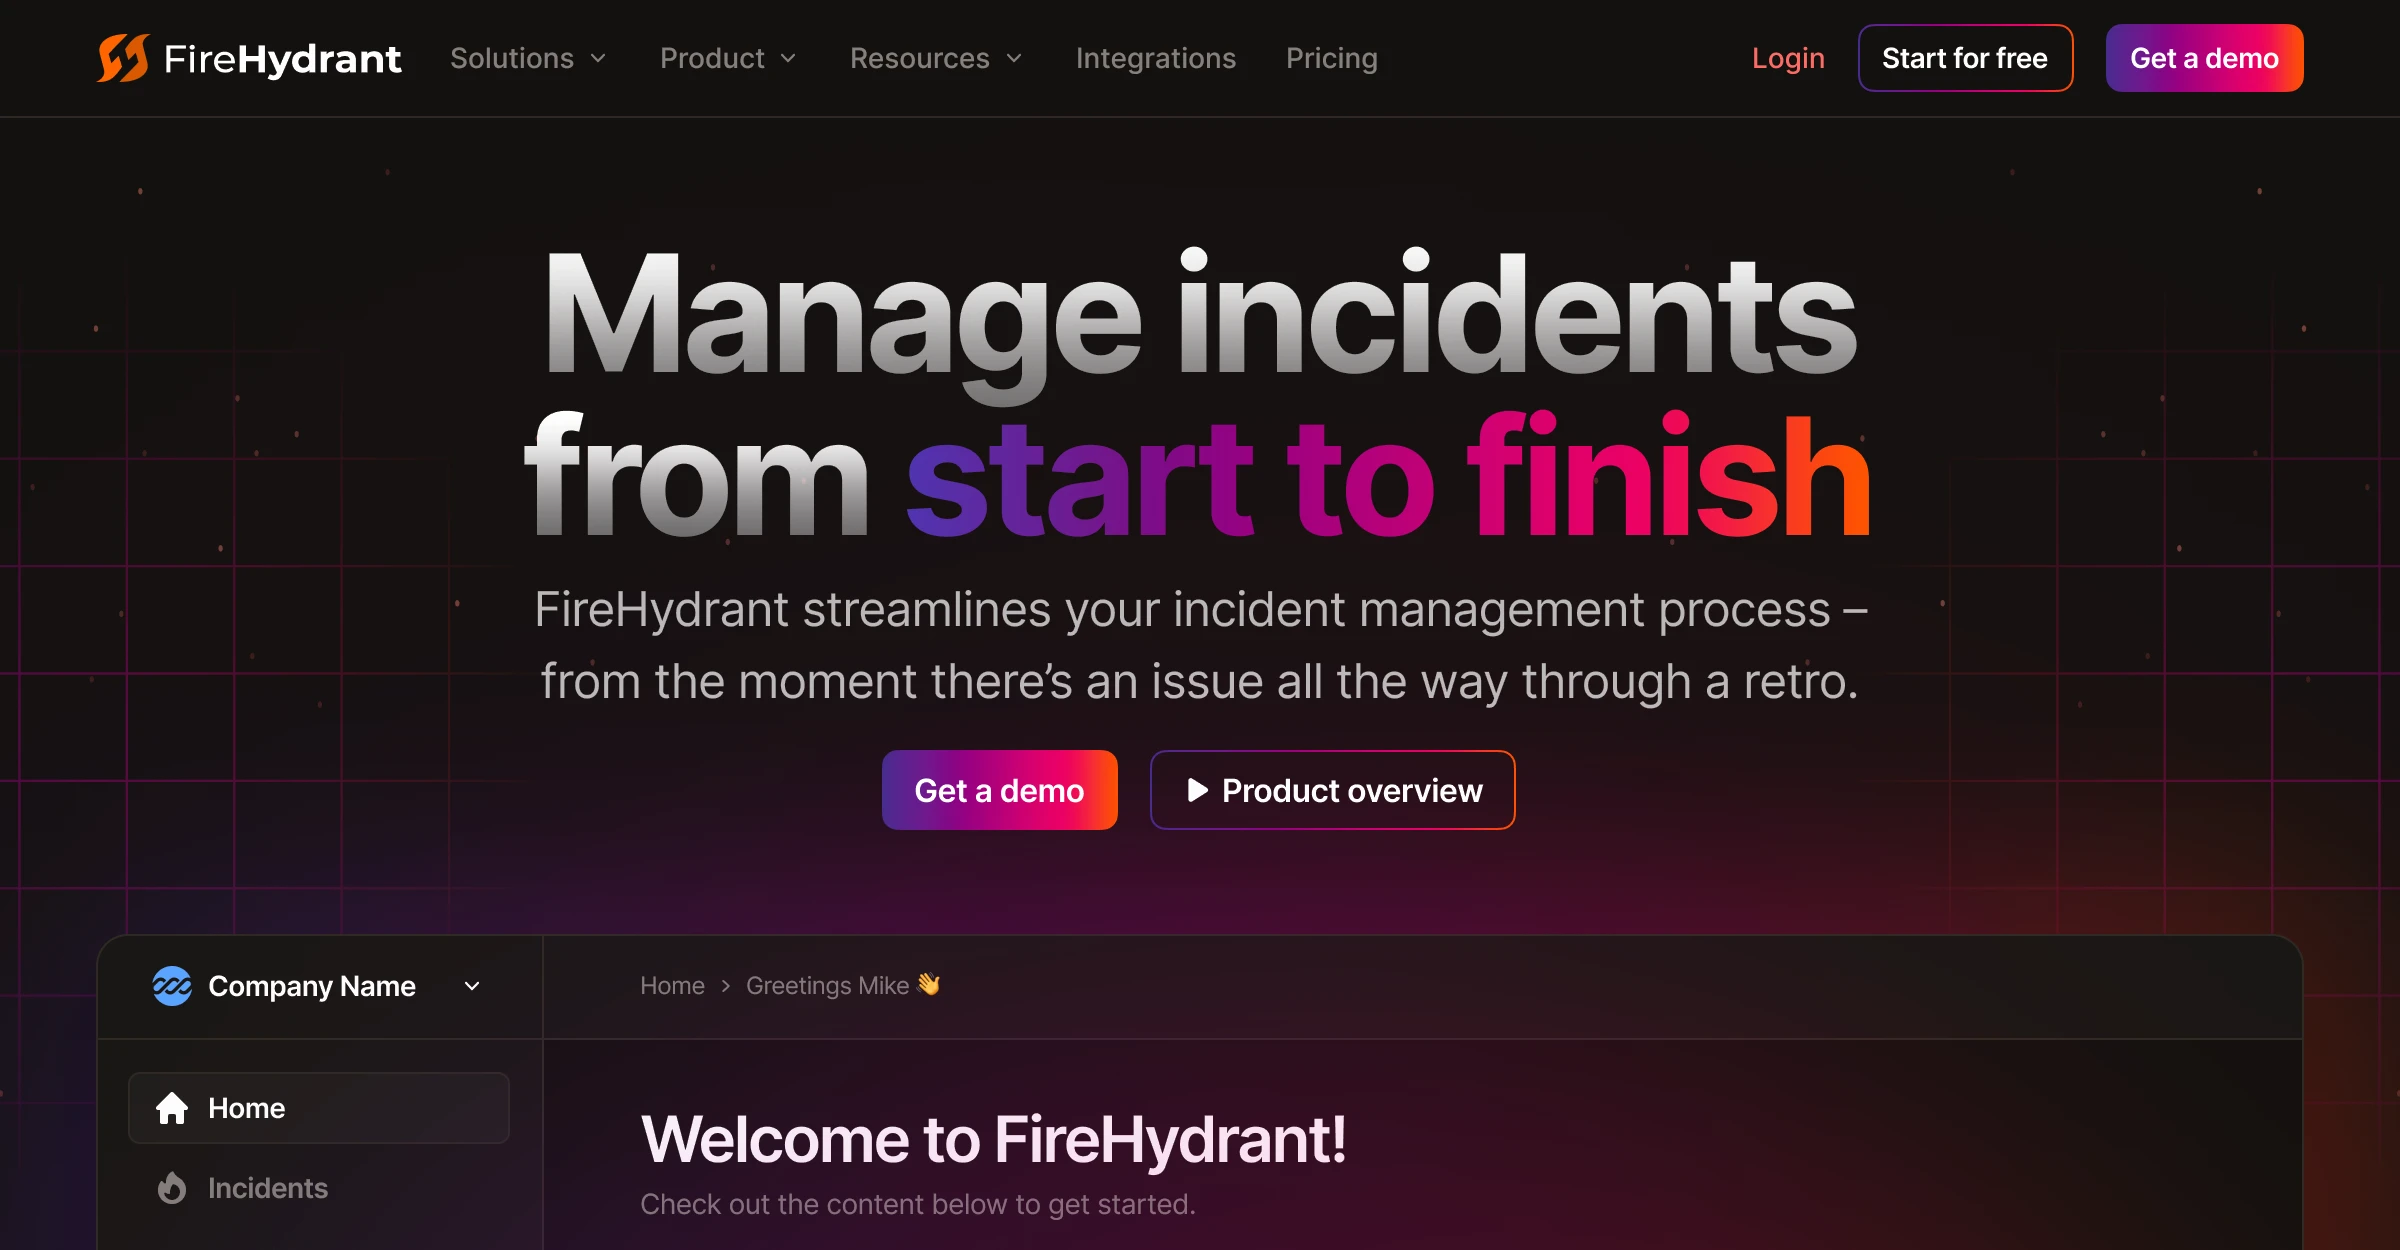 FireHydrant marketing website design